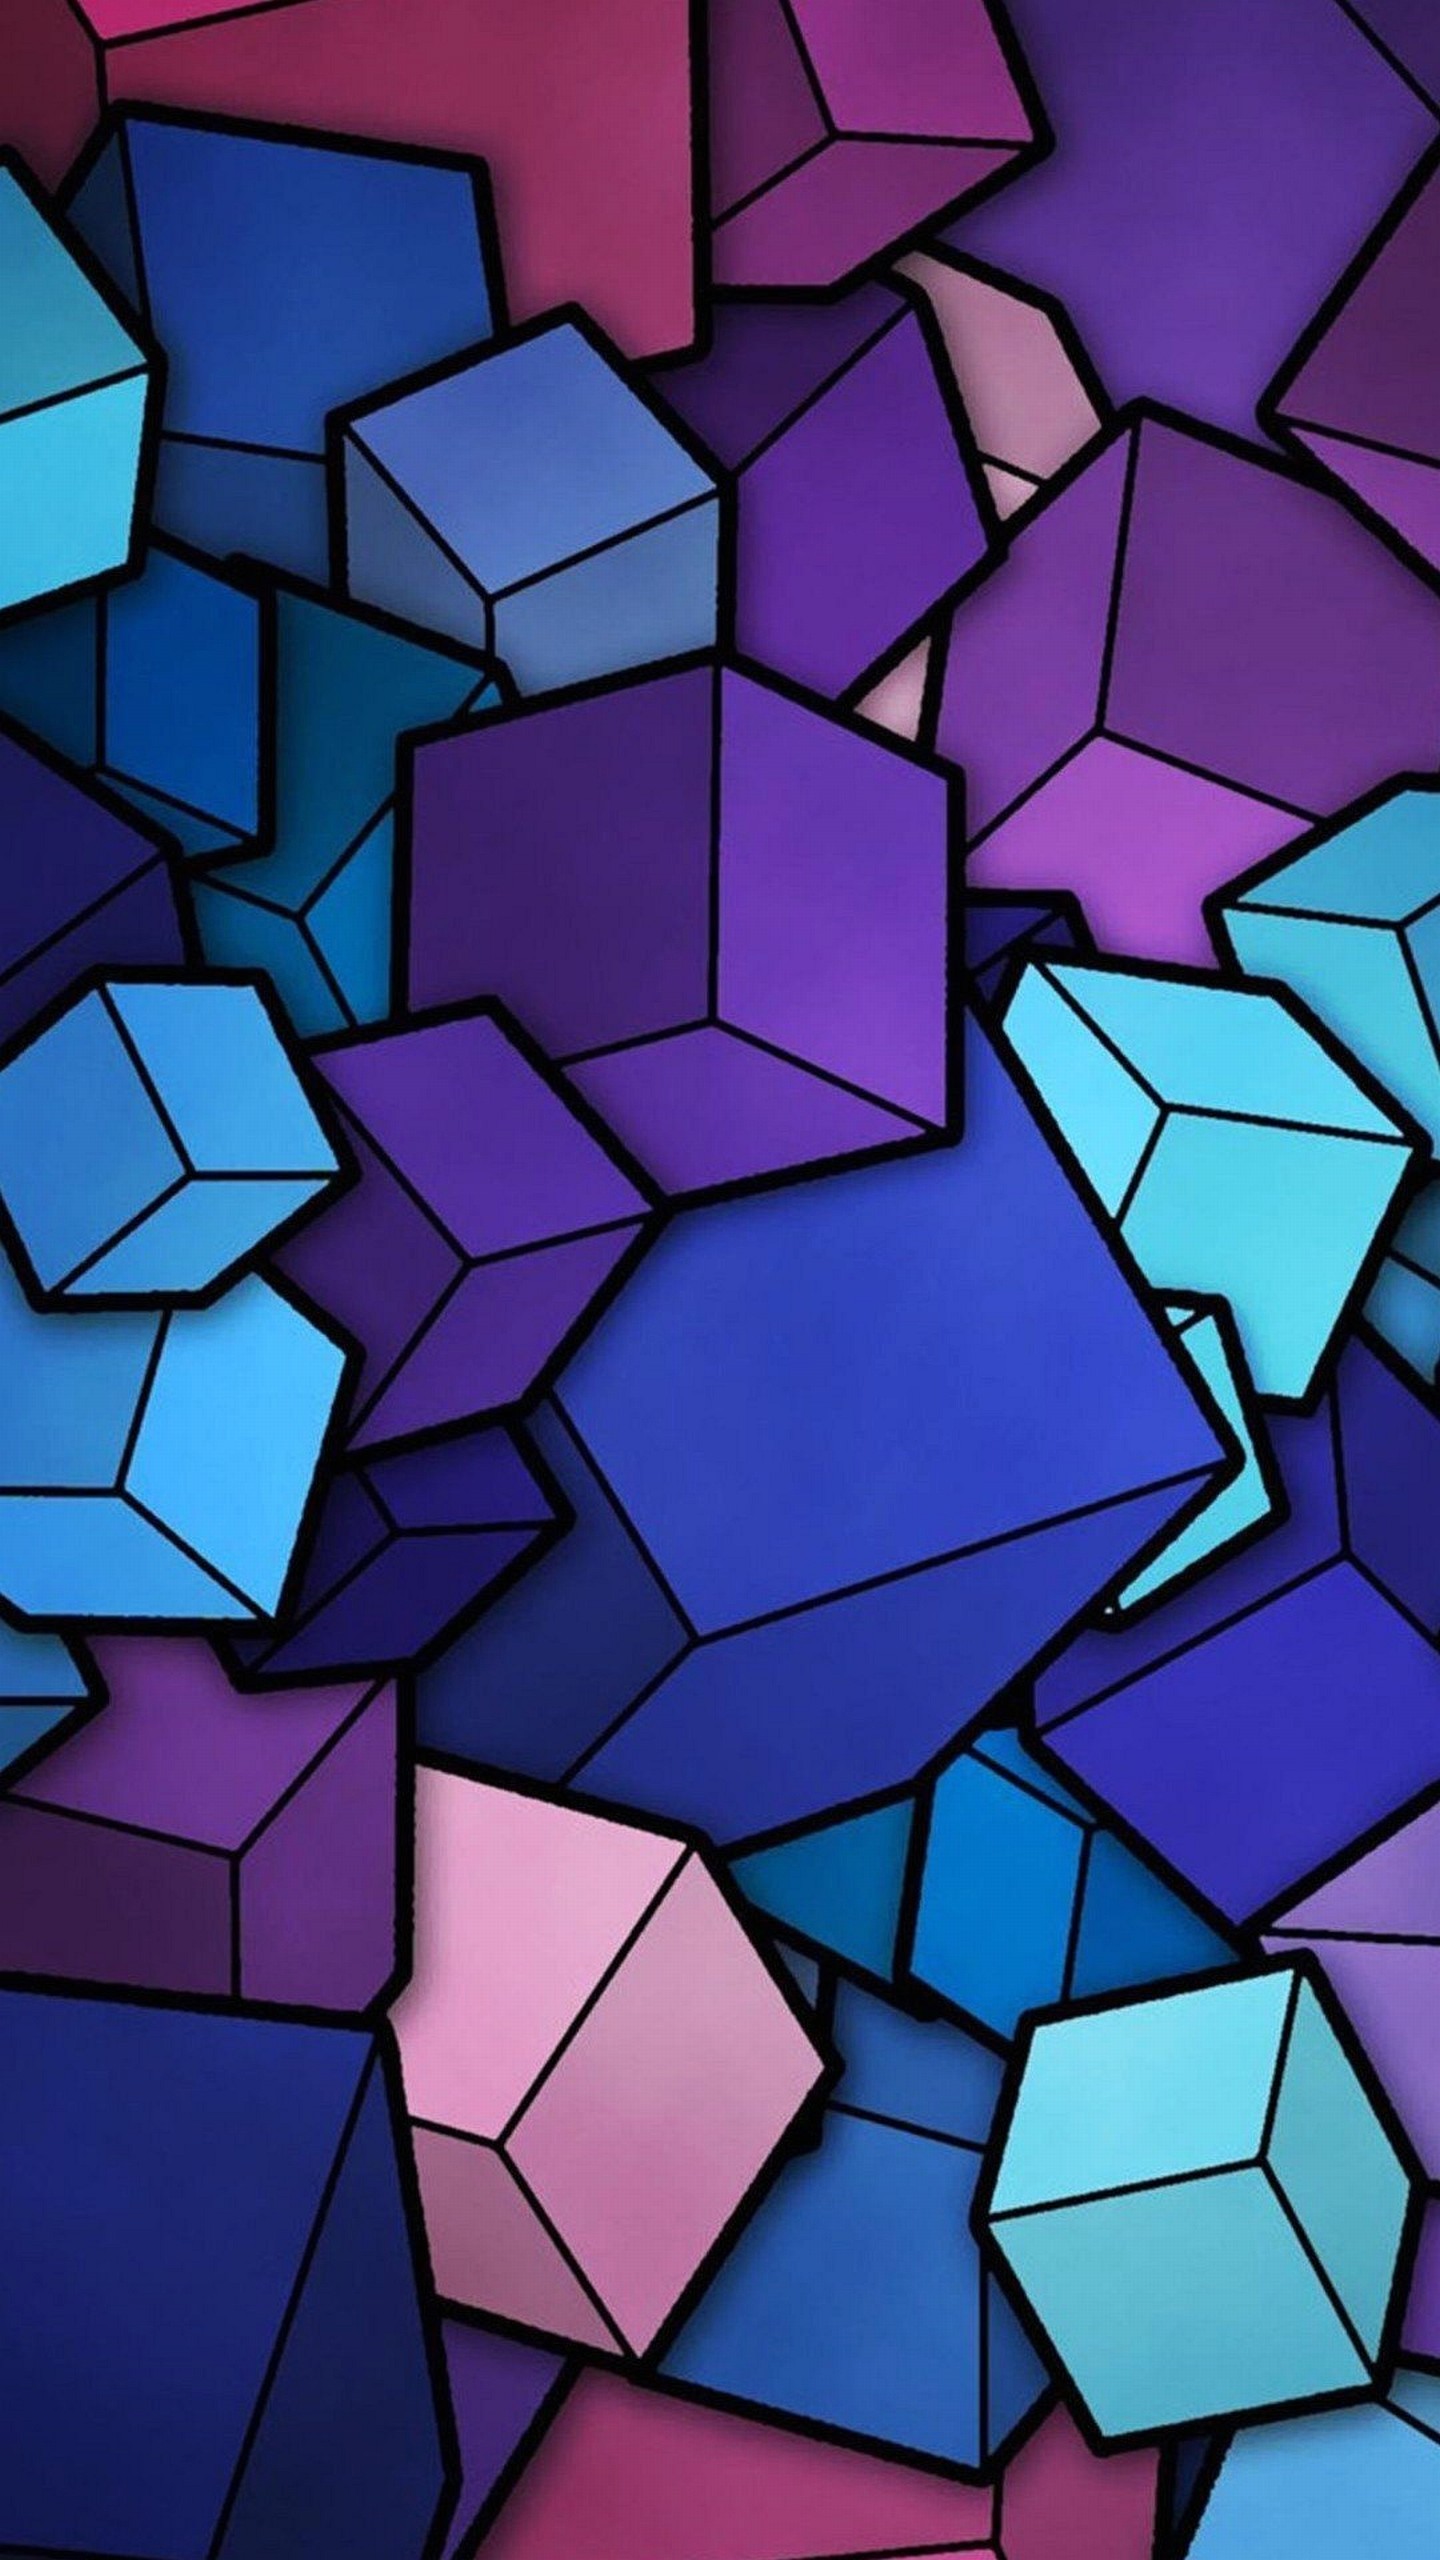 1440x2560 Z Wallpaper Lg G3 Cubes Abstract 1440 2560 241